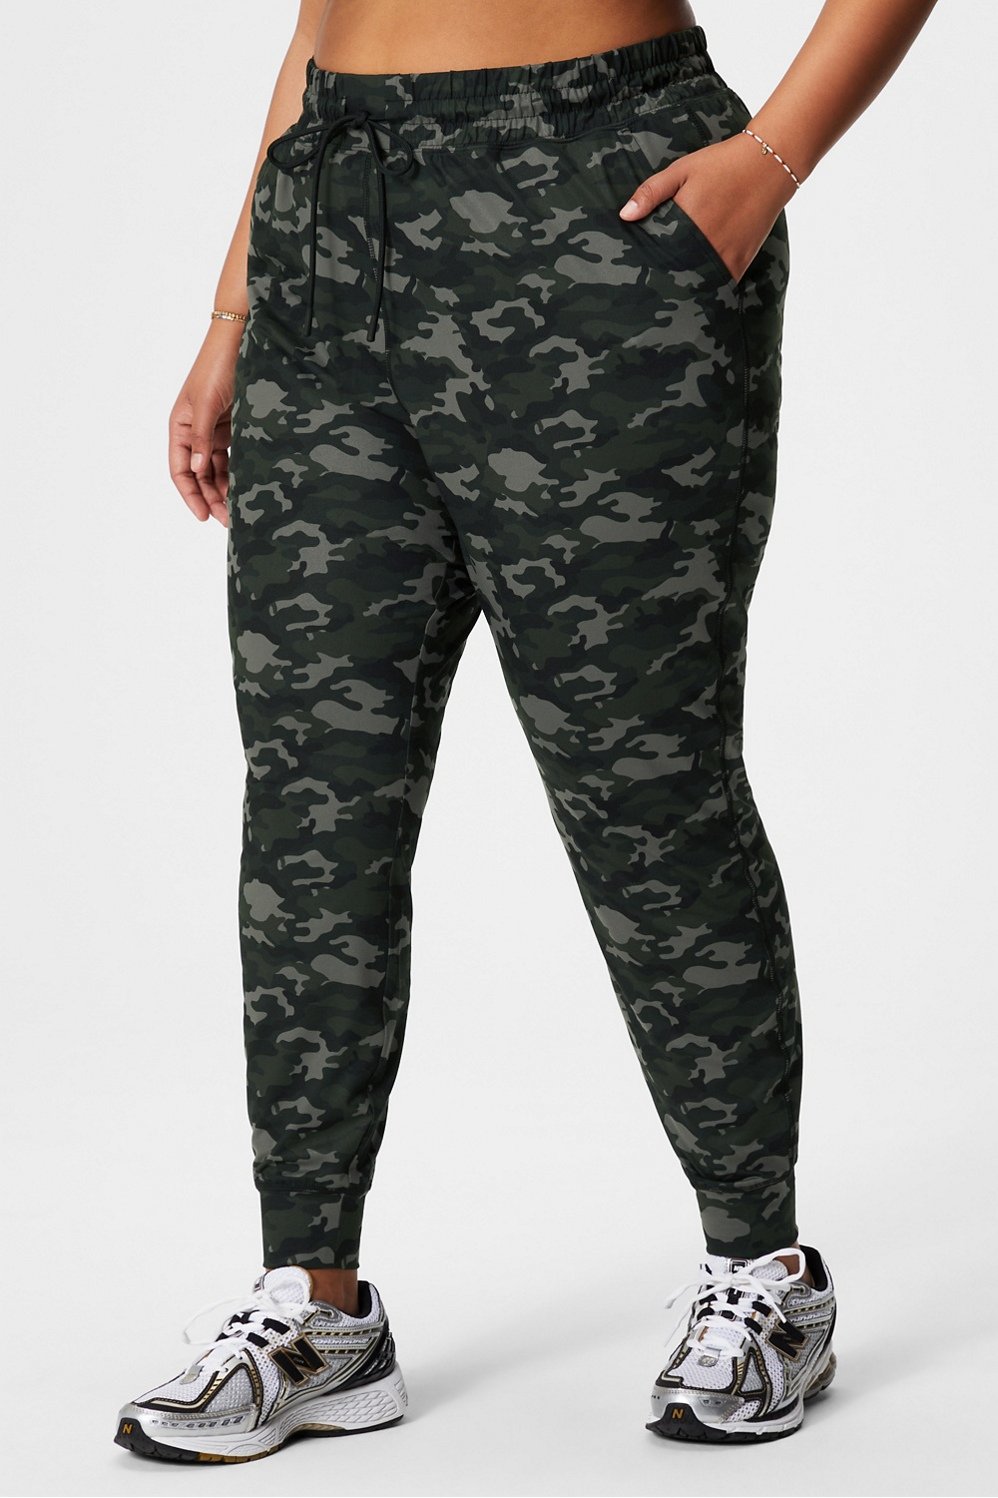 Buy the Fabletics Women Camo Athletic Pants 4X NWT